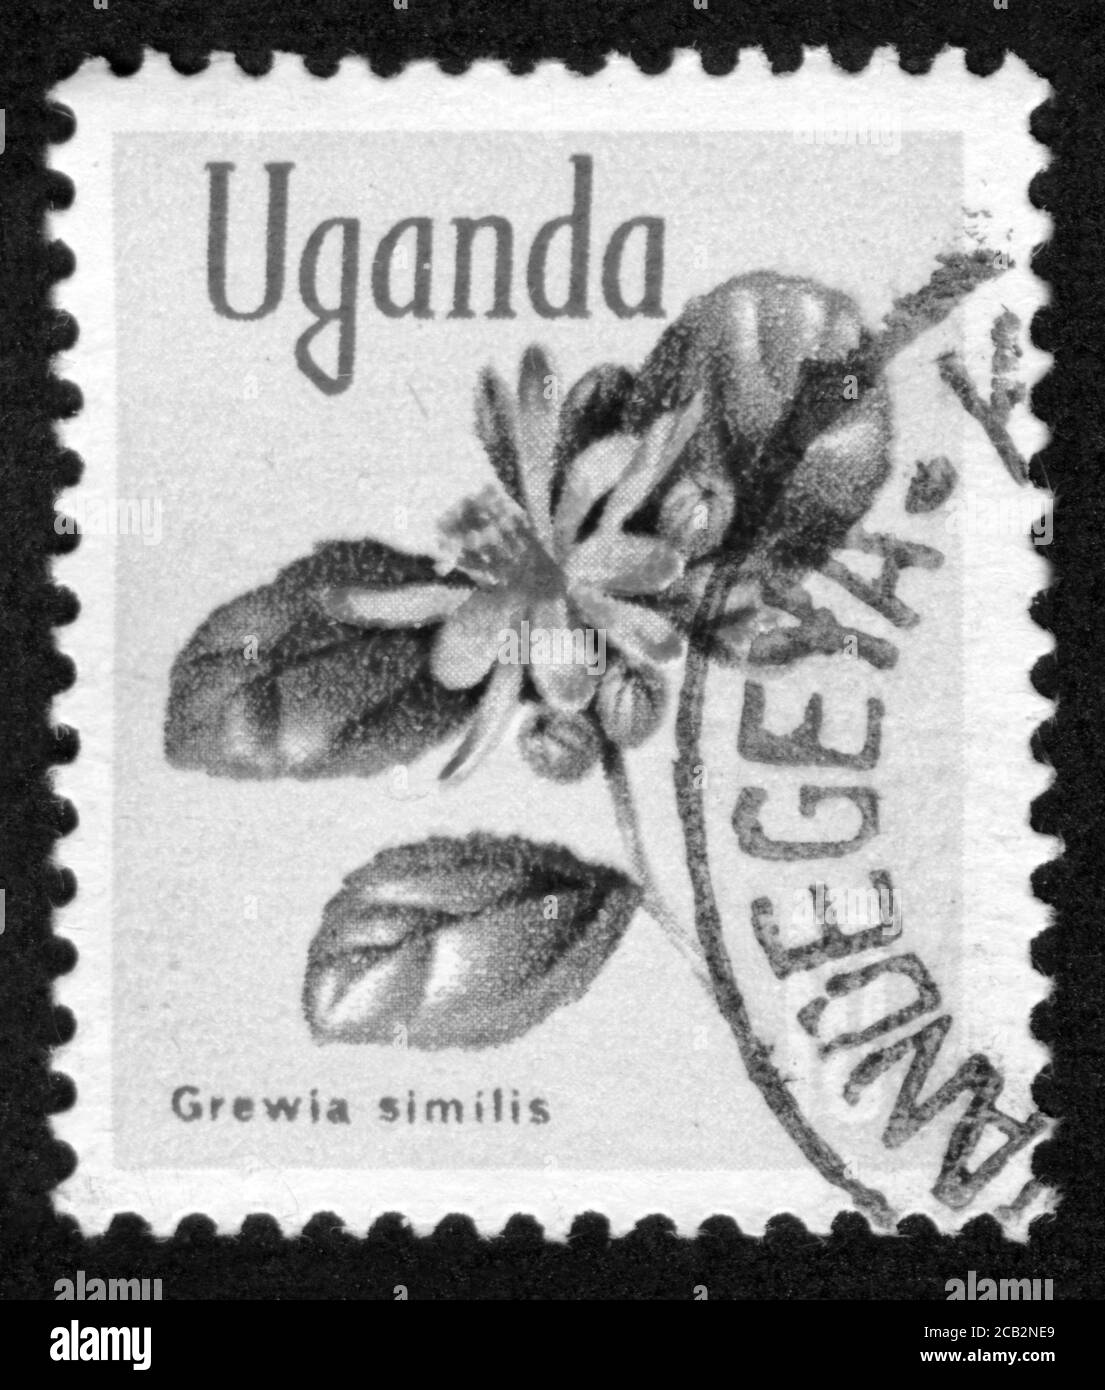 Stamp print in Uganda,Grewia similis Stock Photo